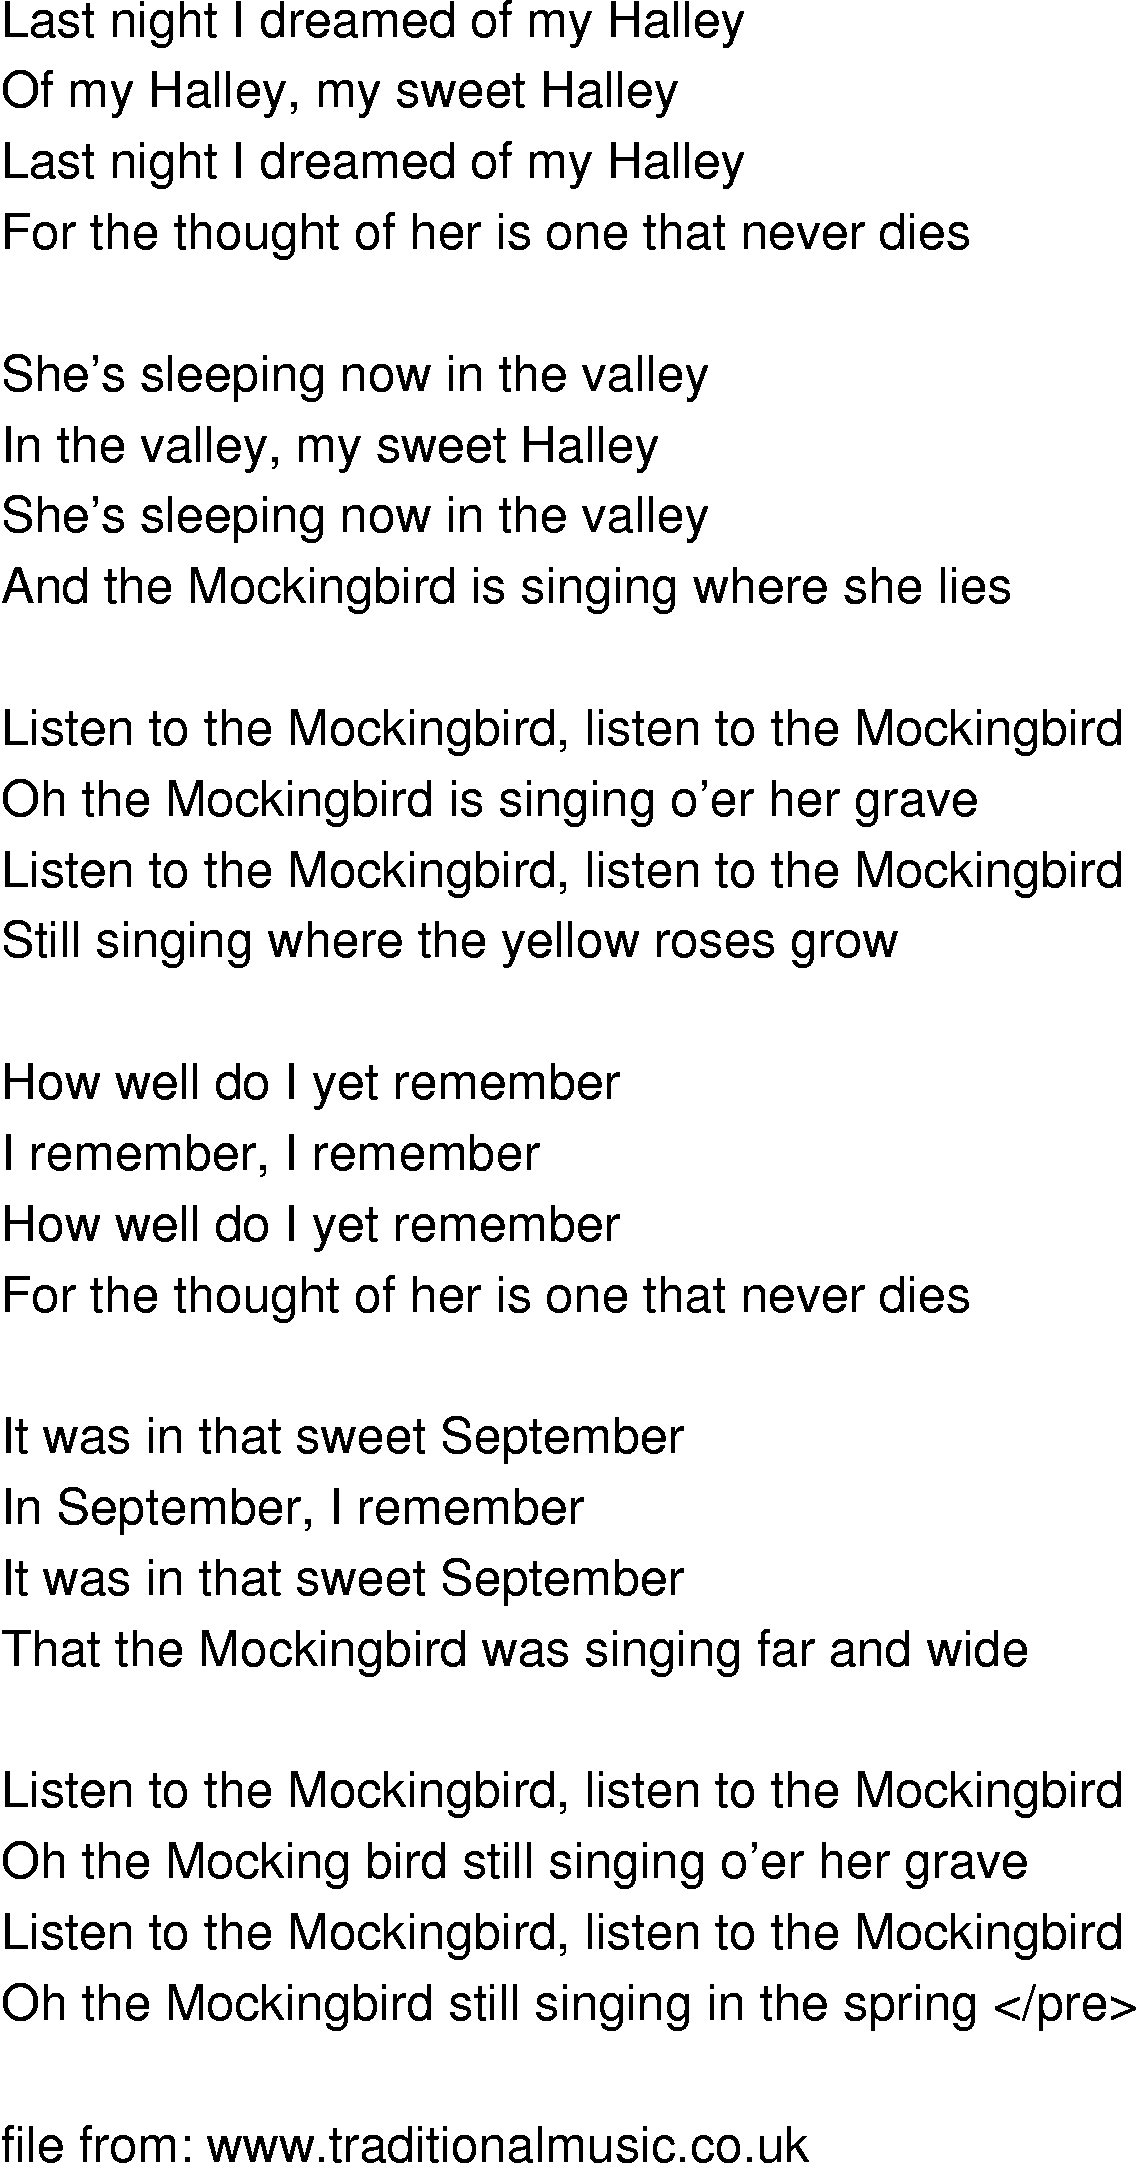 Old-Time (oldtimey) Song Lyrics - listen to the mockingbird